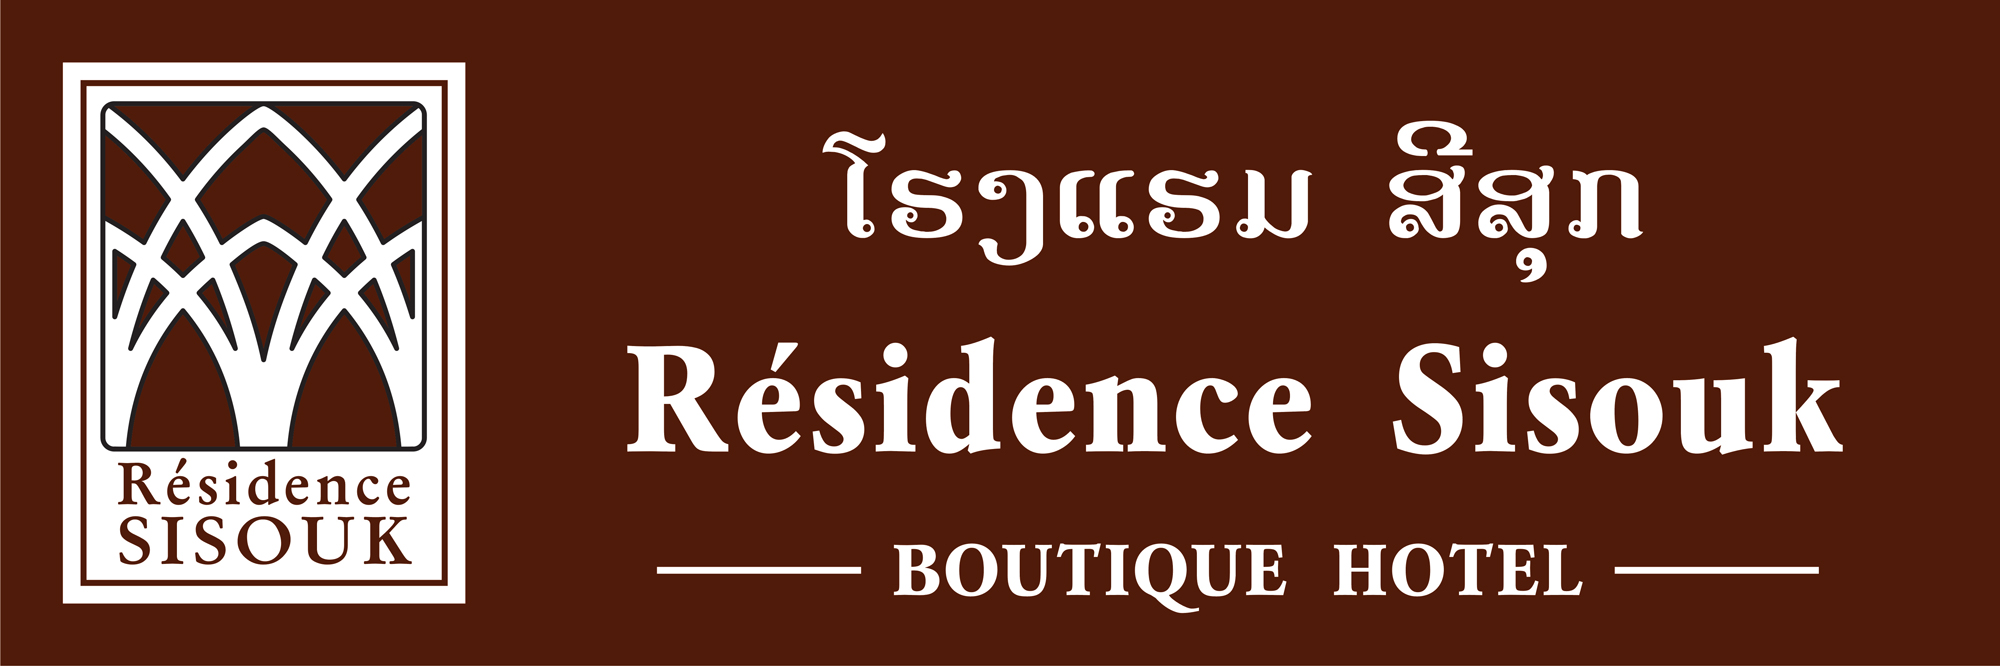 Residence Sisouk 2019